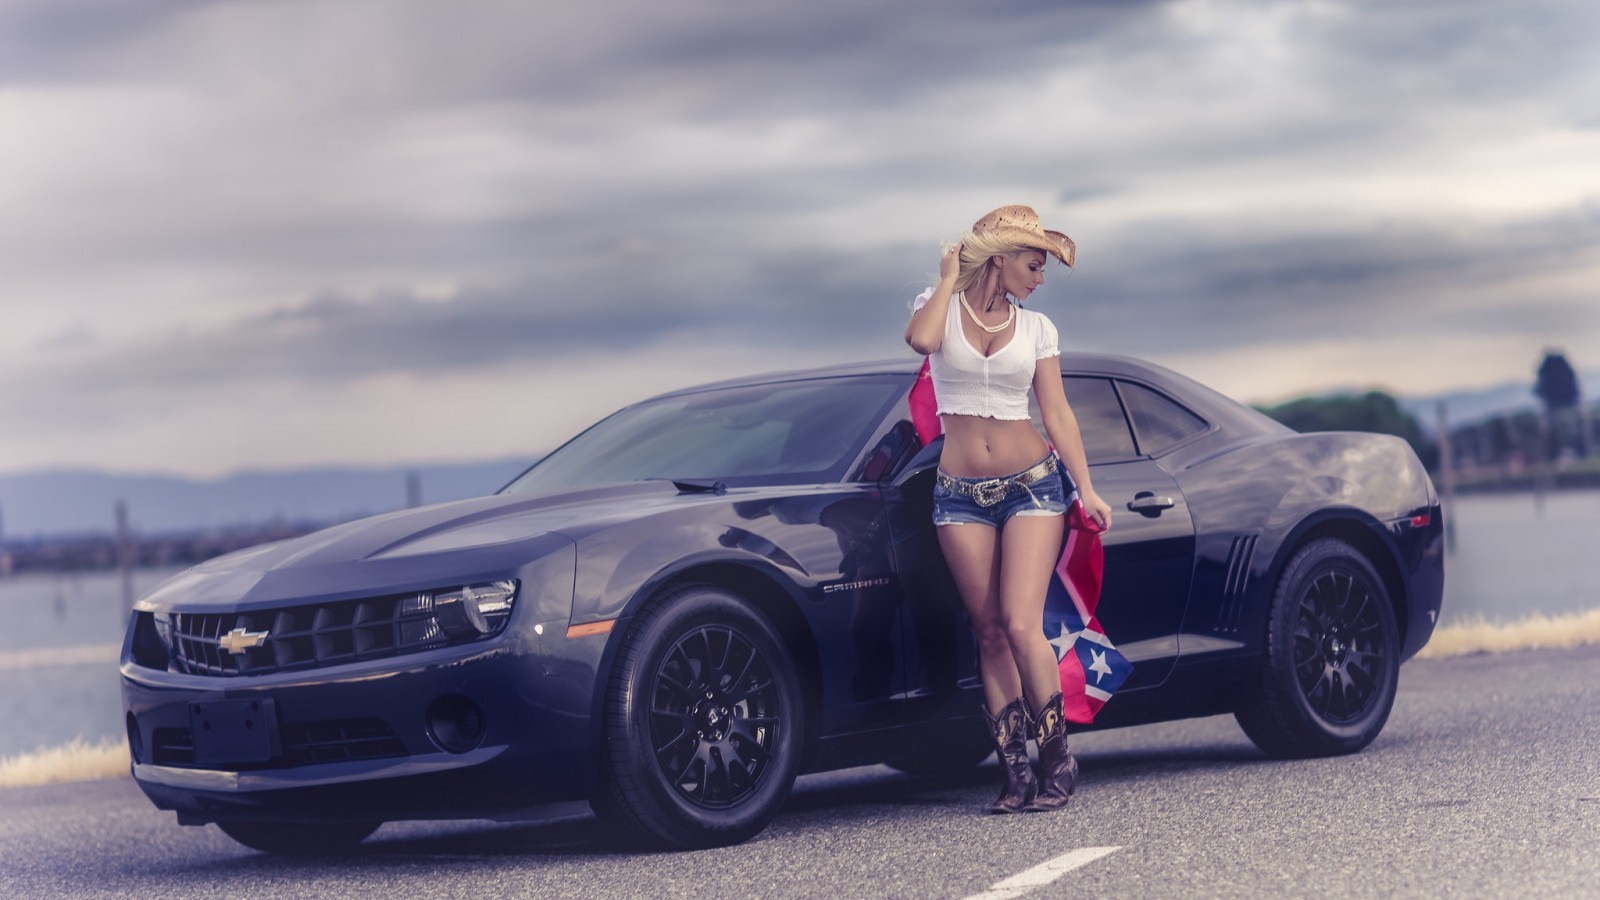 Women Car Blonde Cowboy Hats White Tops Women With Cars 1600x900